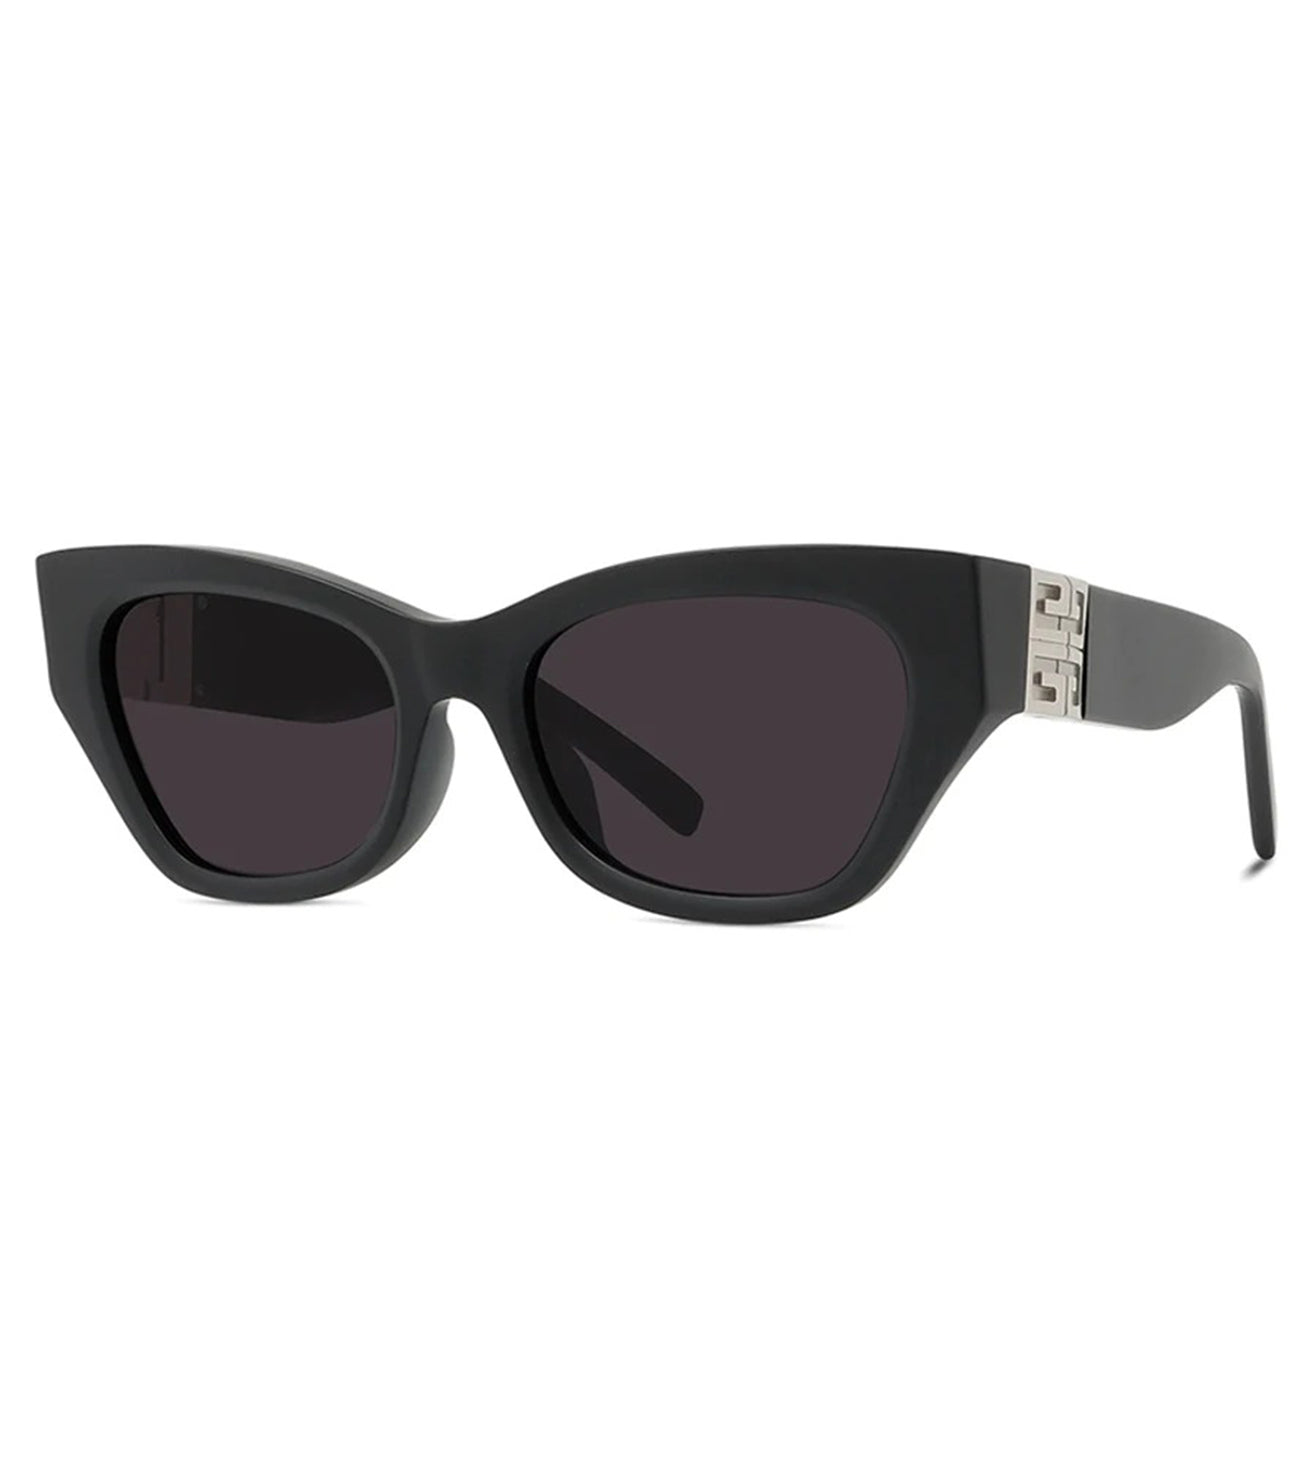 Givenchy Women's Smoke-Grey Cat-eye Sunglasses